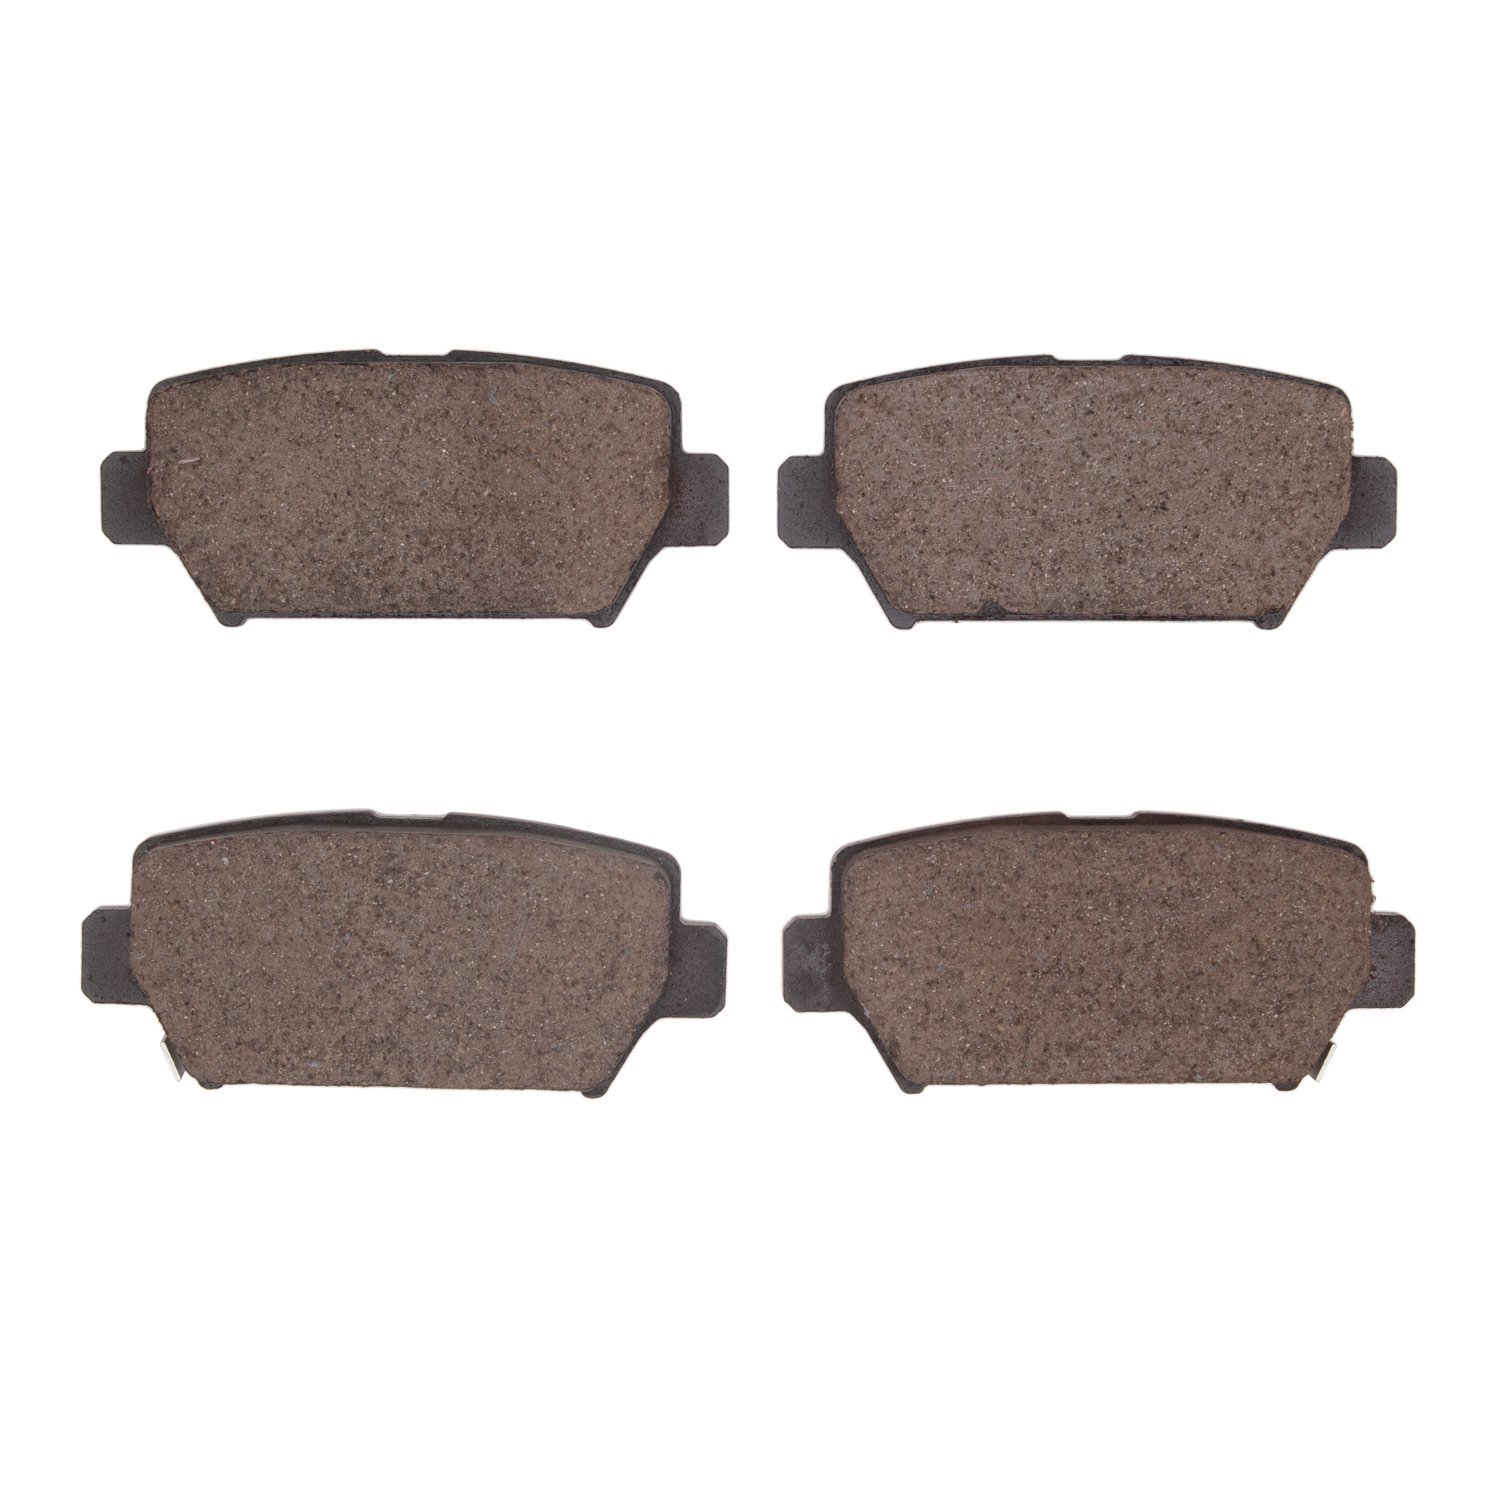 Ceramic Brake Pads, Fits Select Mitsubishi, Position: Rear